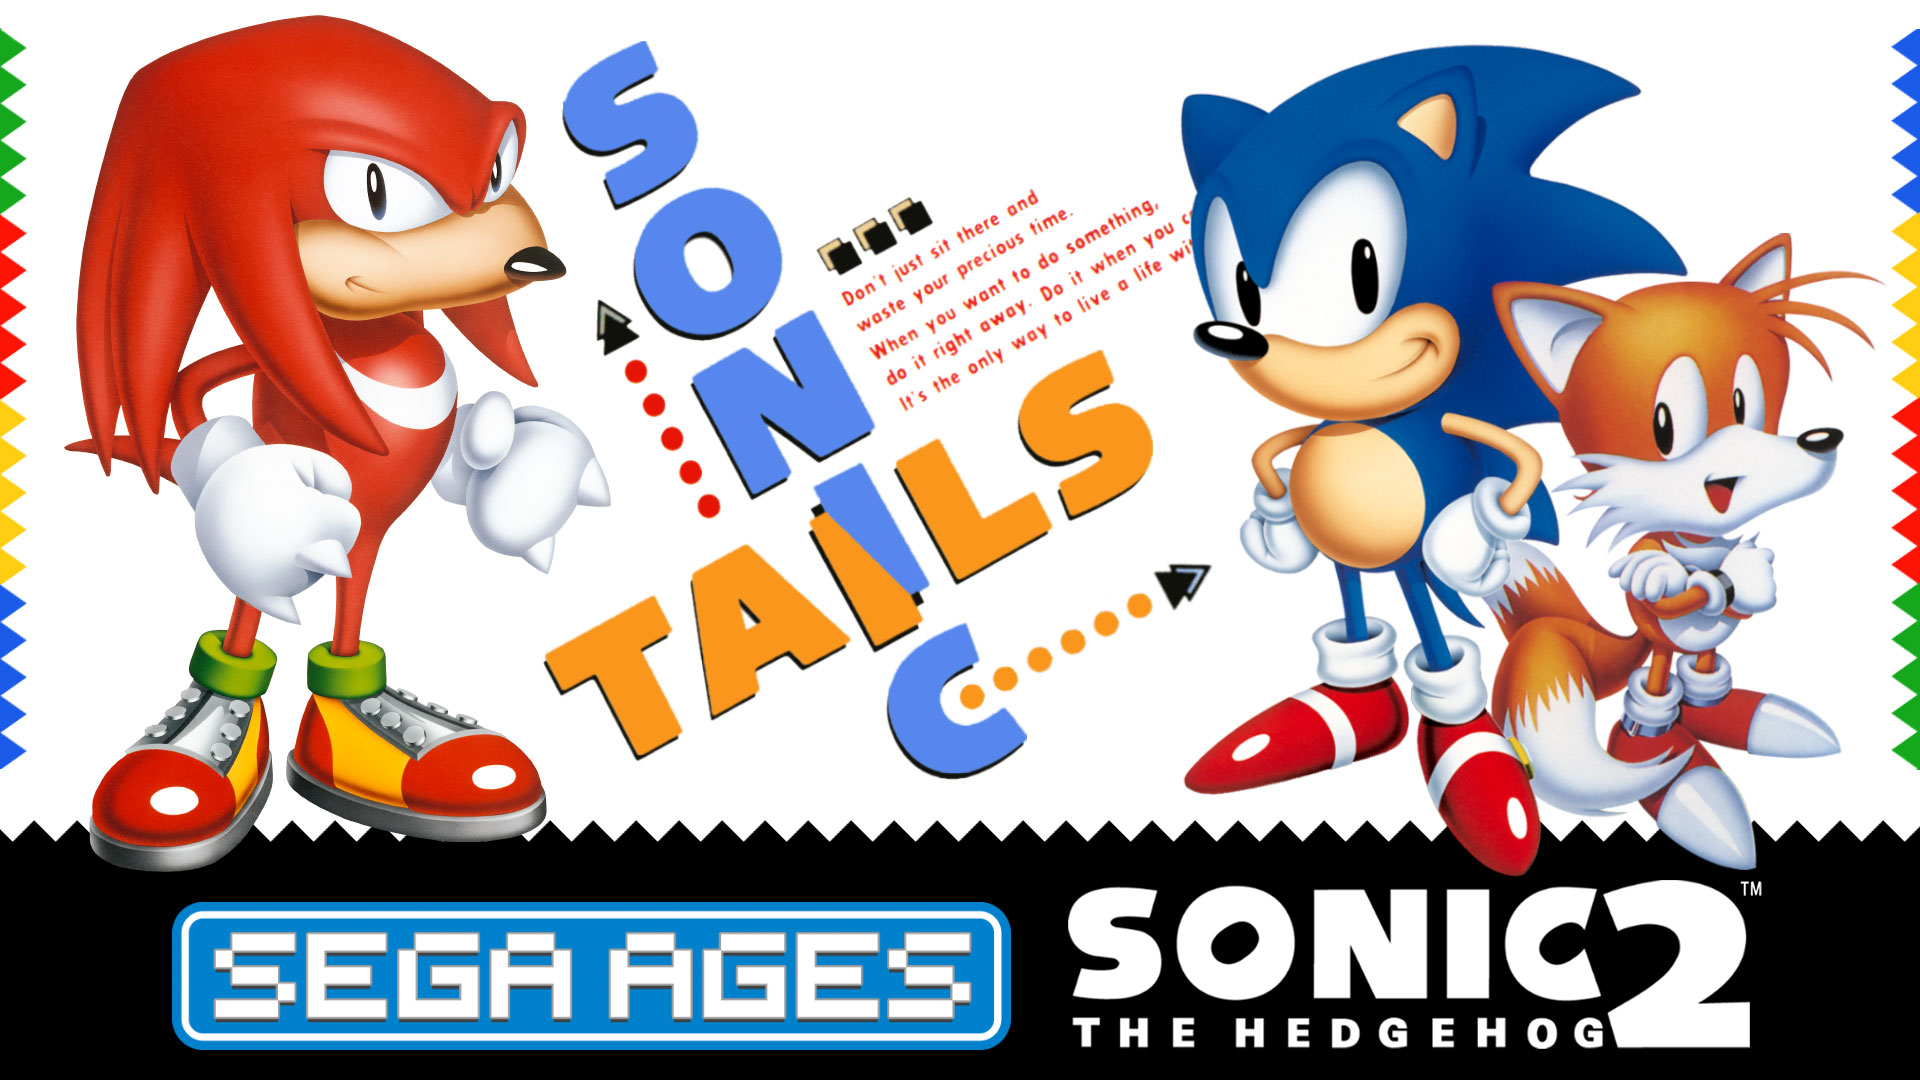 Sonic The Hedgehog Sprite Sheets: Game Boy Advance - Sonic Galaxy.net